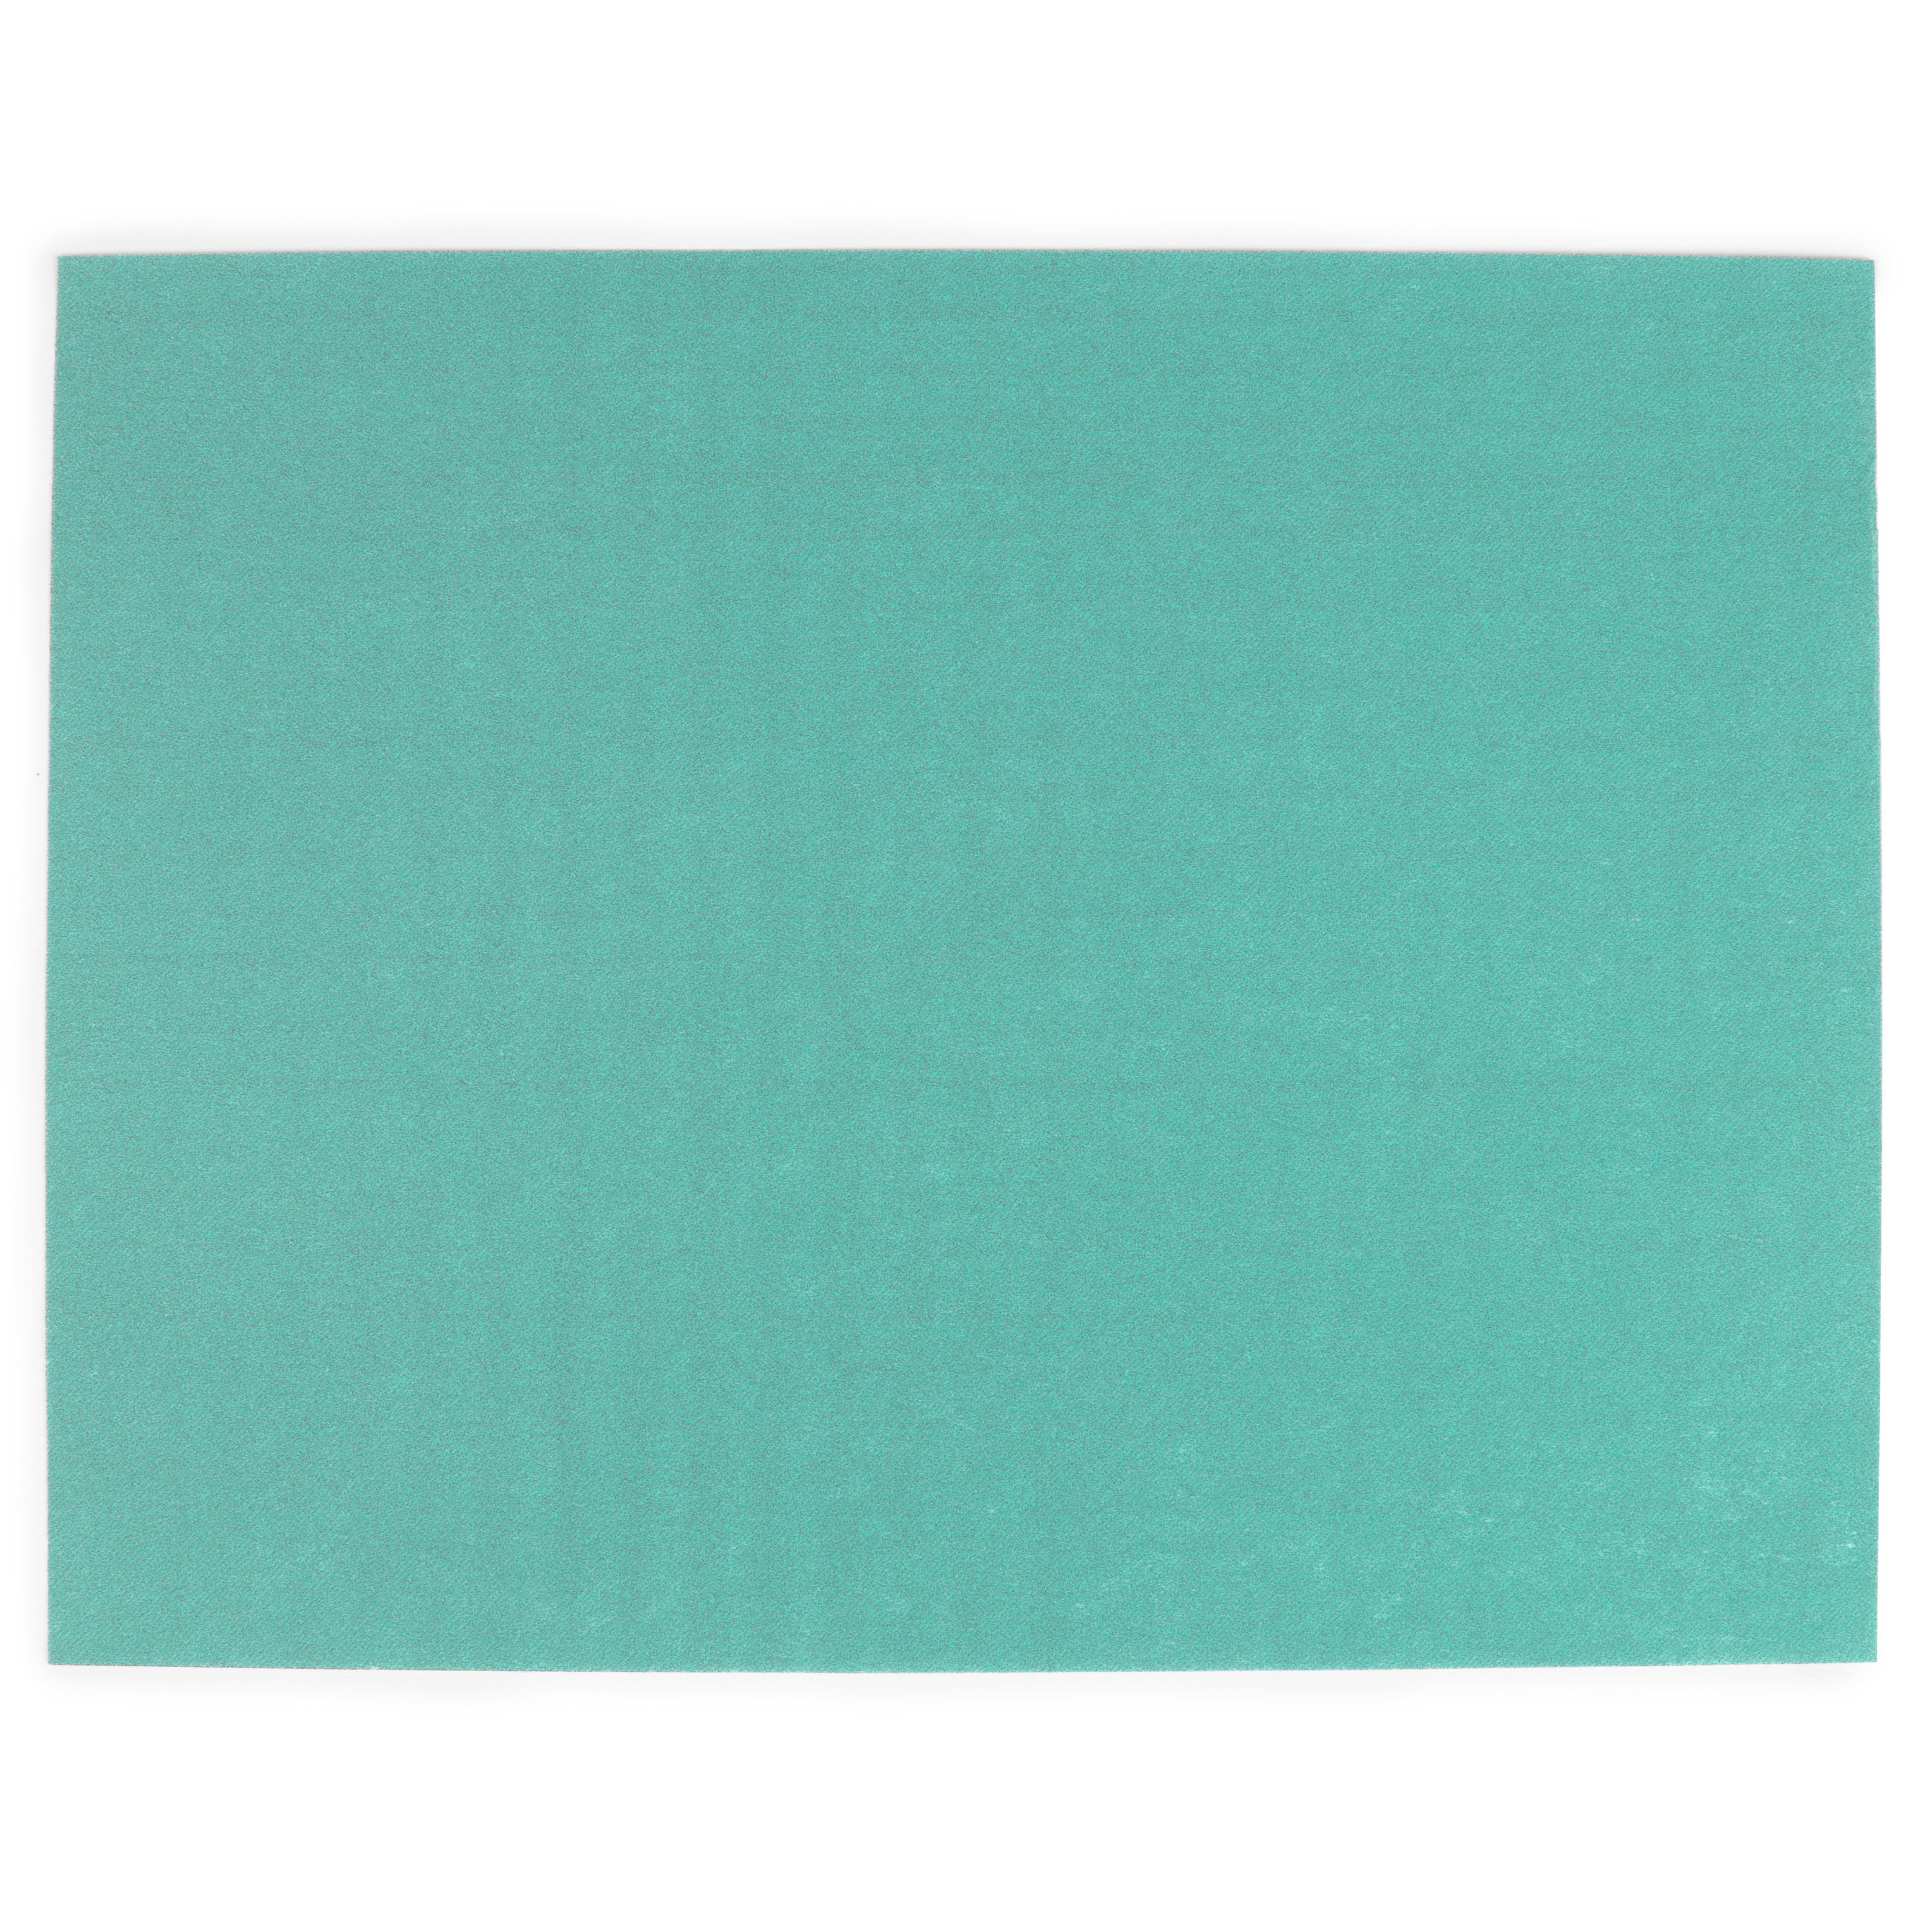 3M Wet/Dry Polishing Paper – Assortment